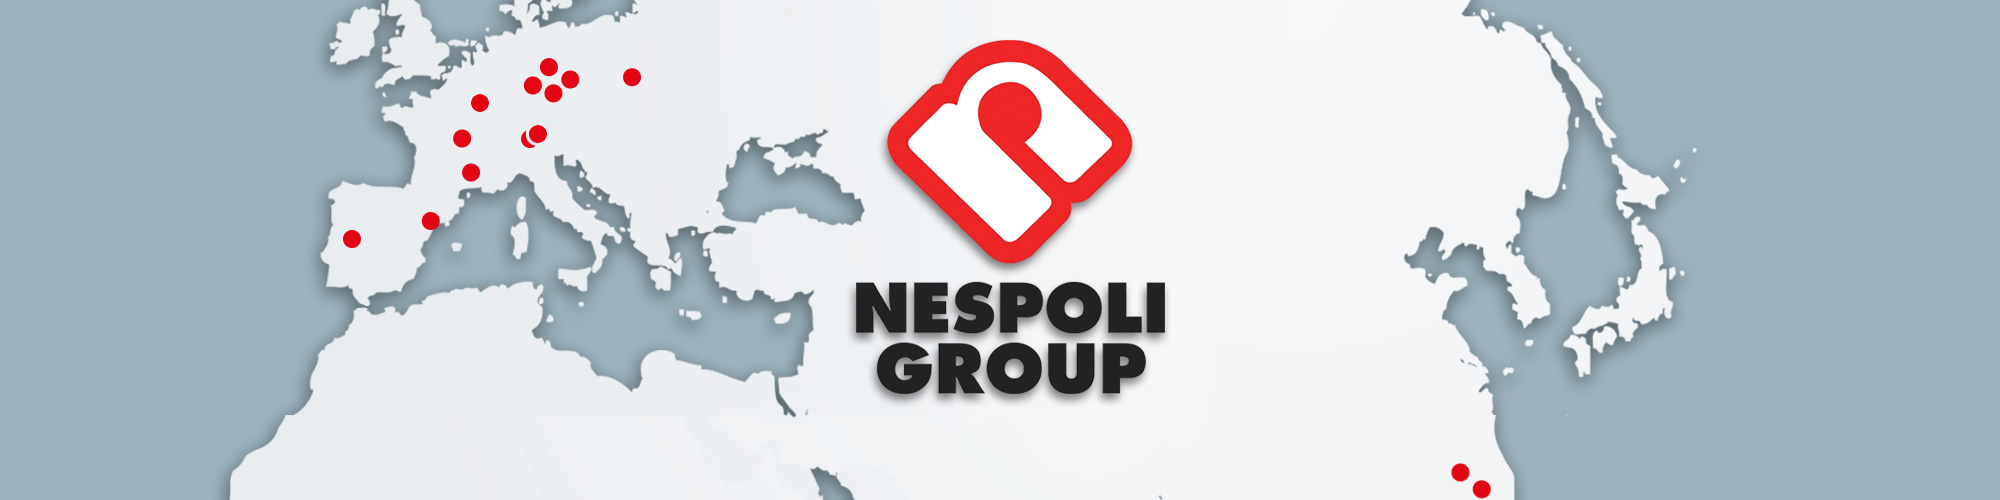 Nespoli Group - Corporate Website